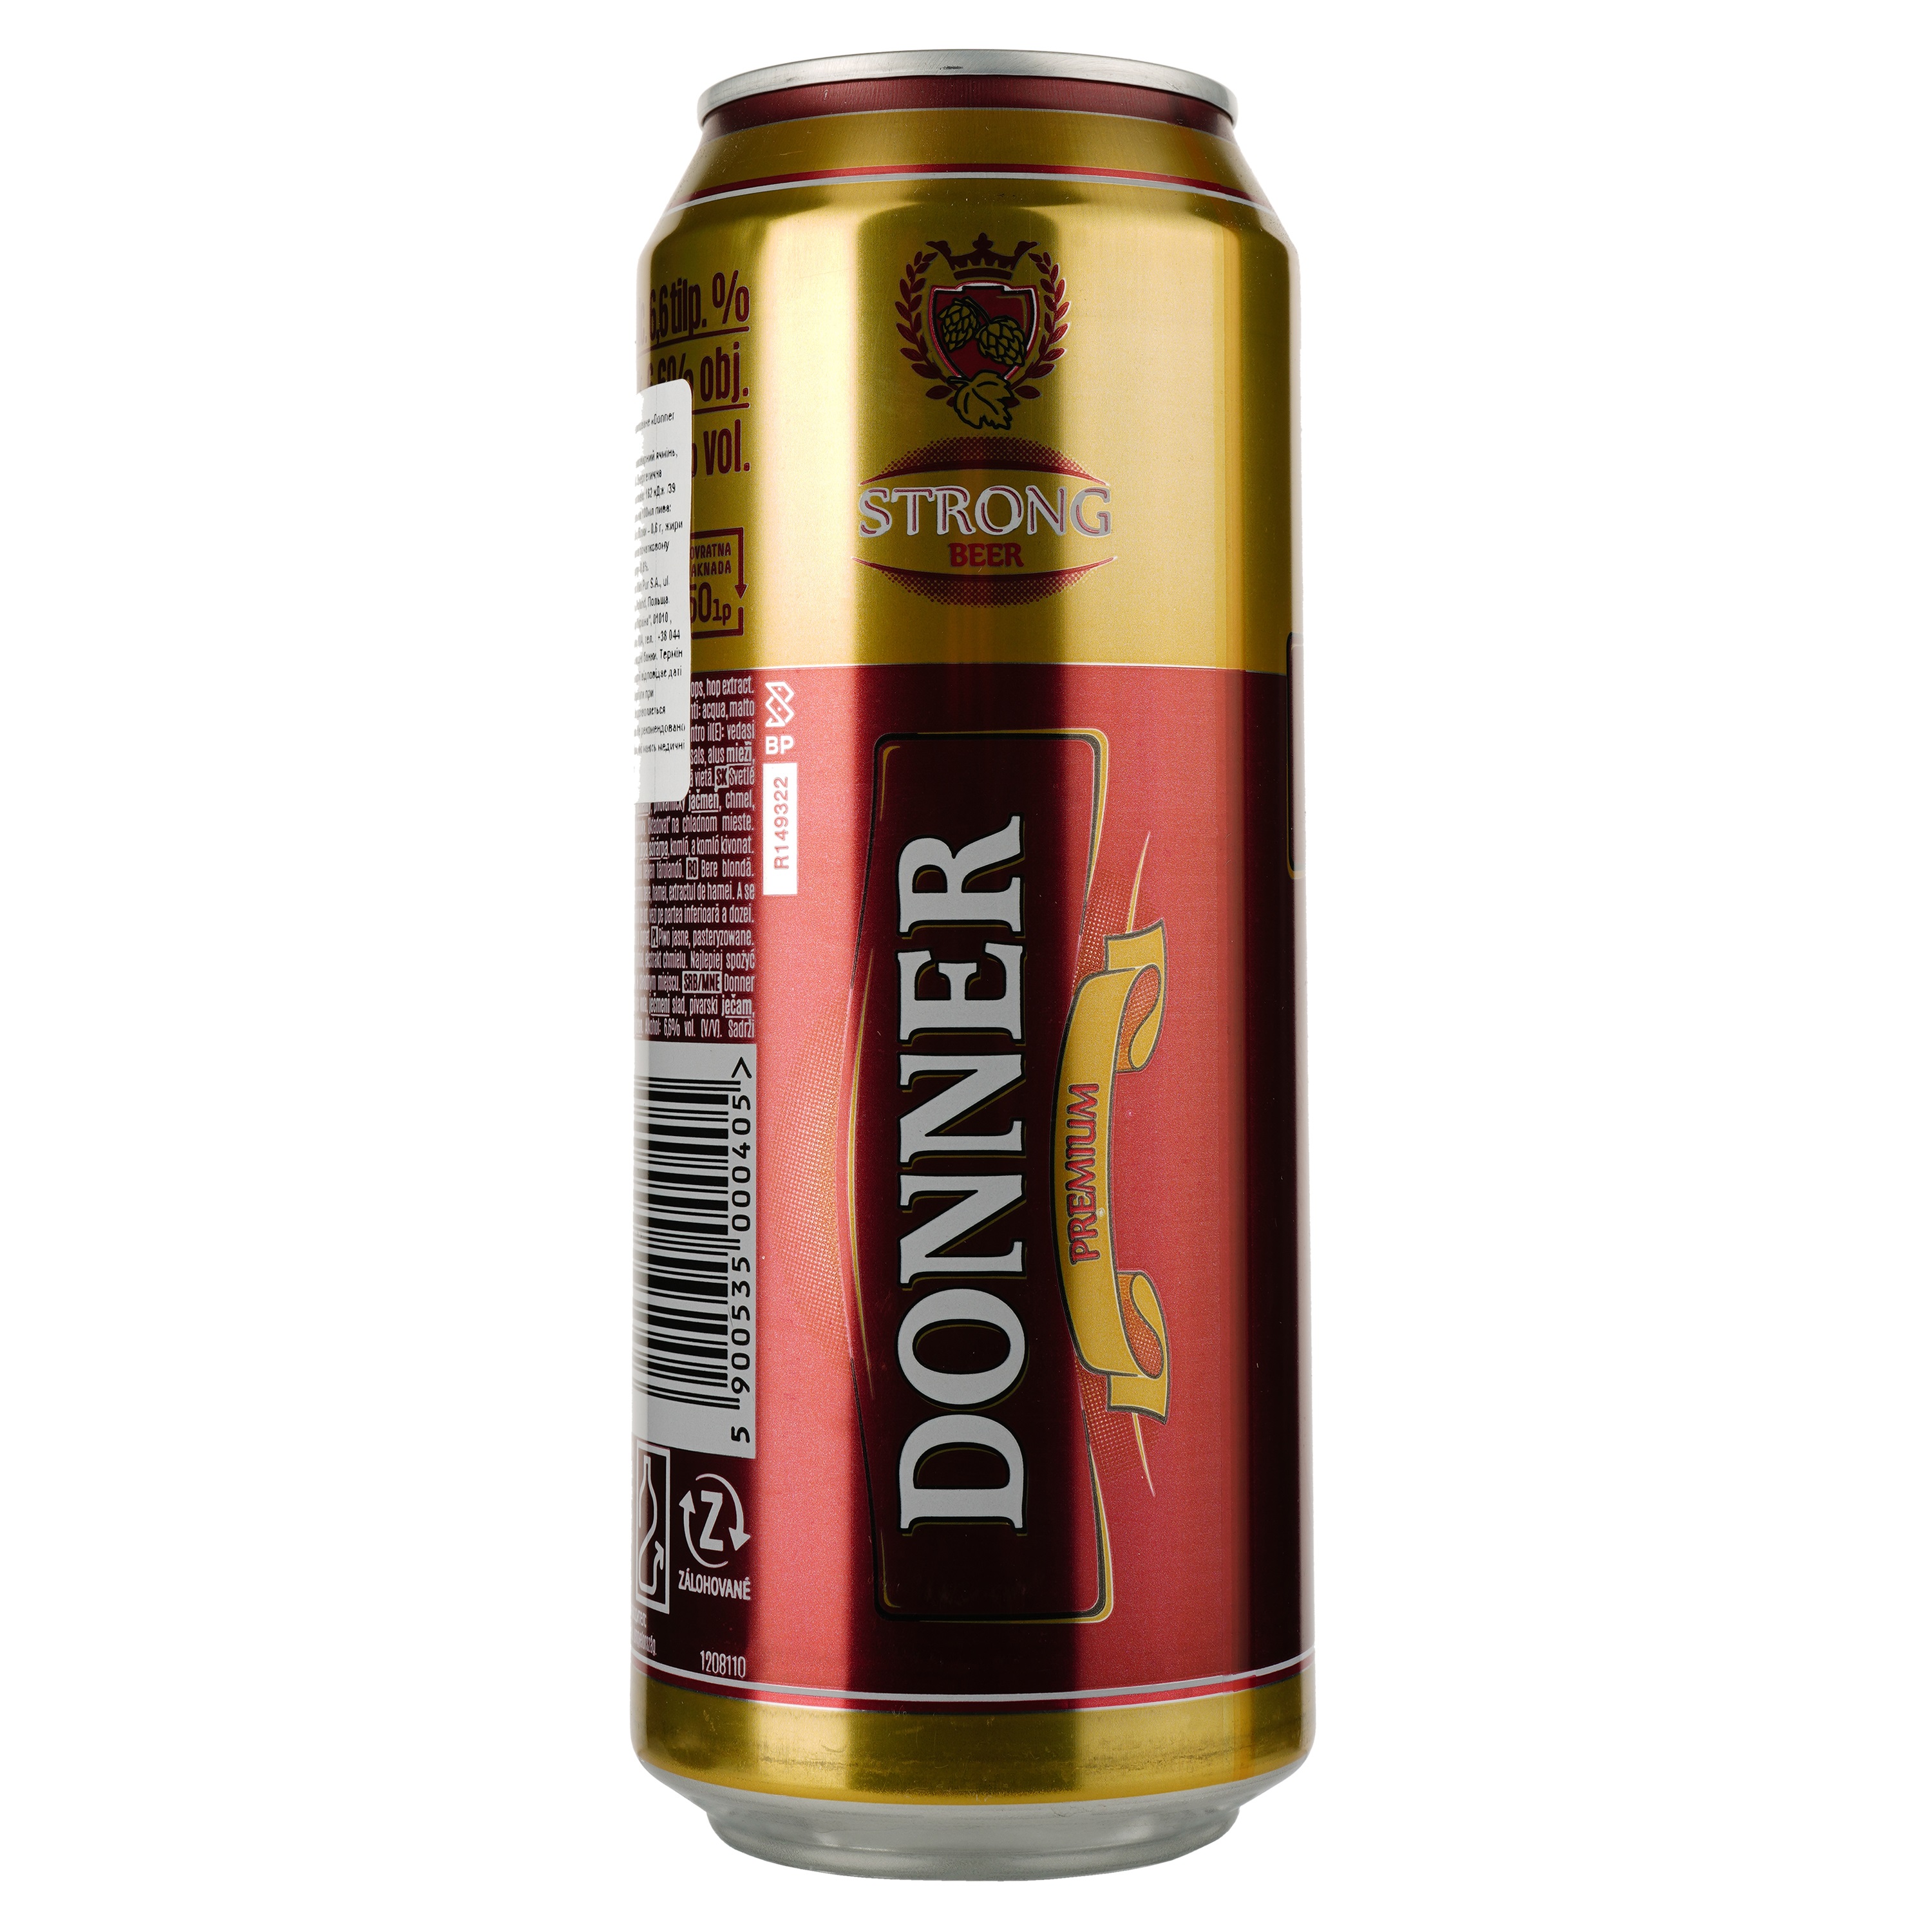 Пиво Donner Strong светлое, 6.6%, ж/б, 0.5 л - фото 2